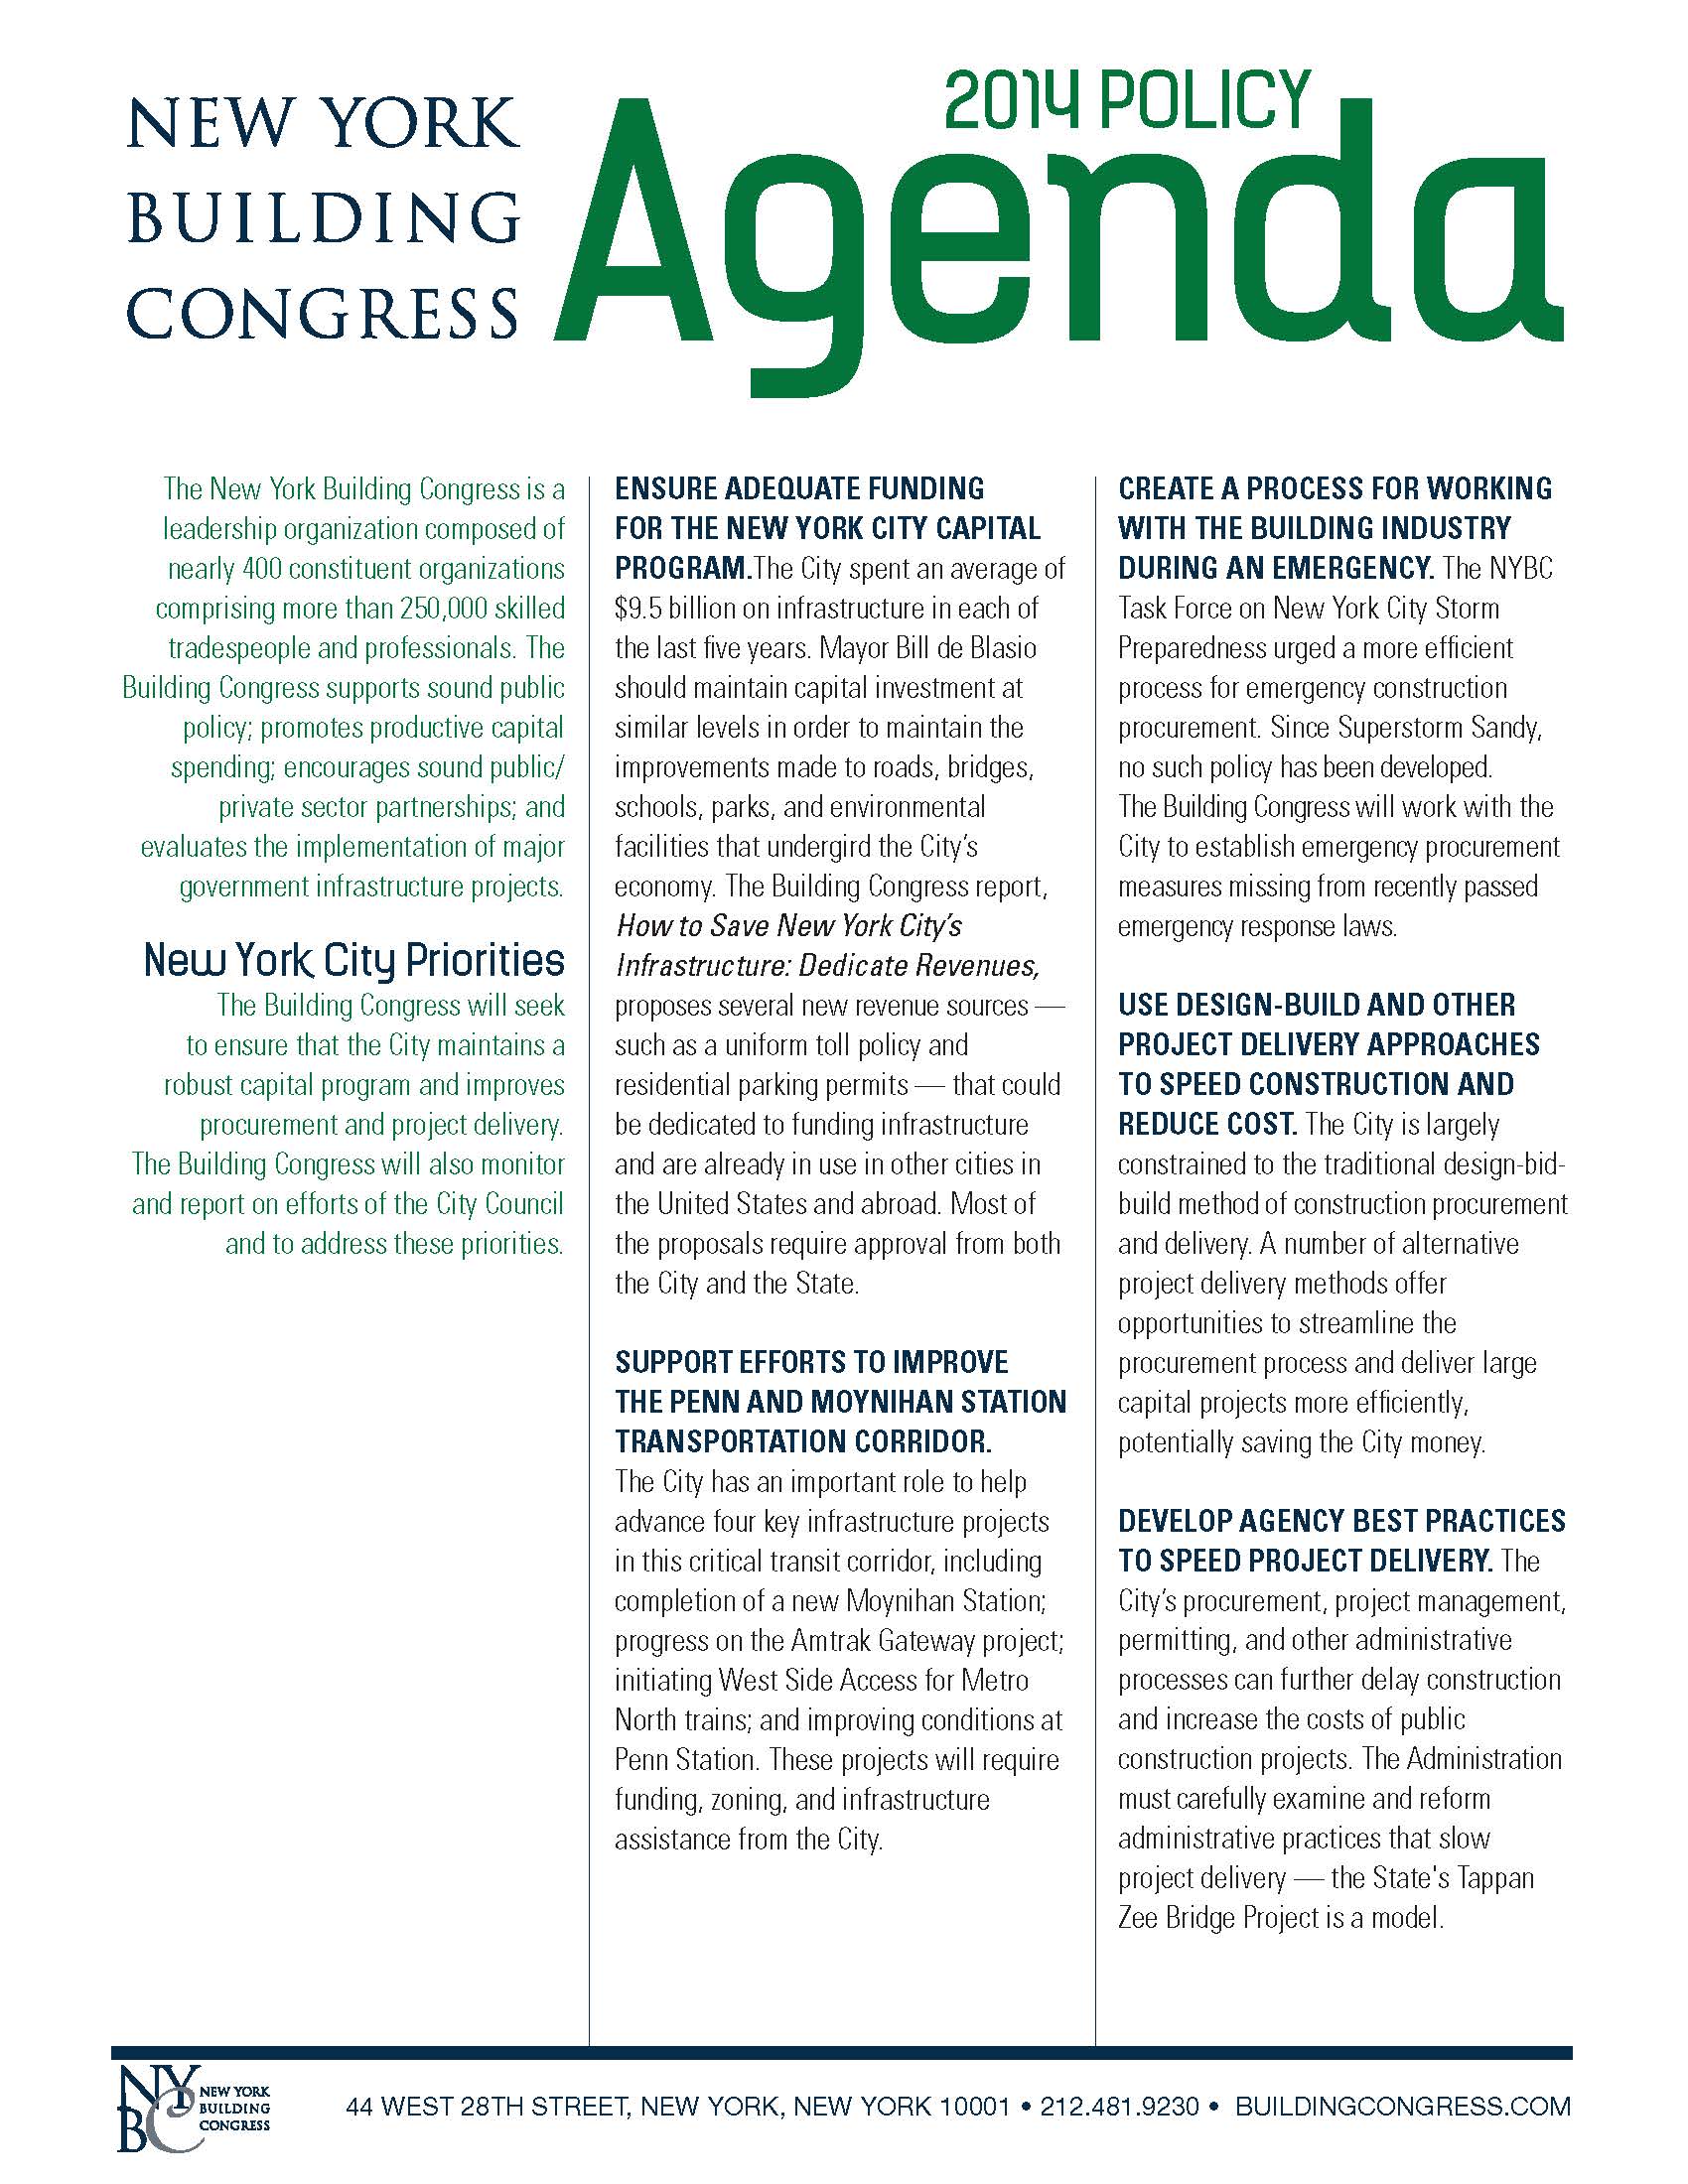 NYBC 2014 Policy Agenda - page 2